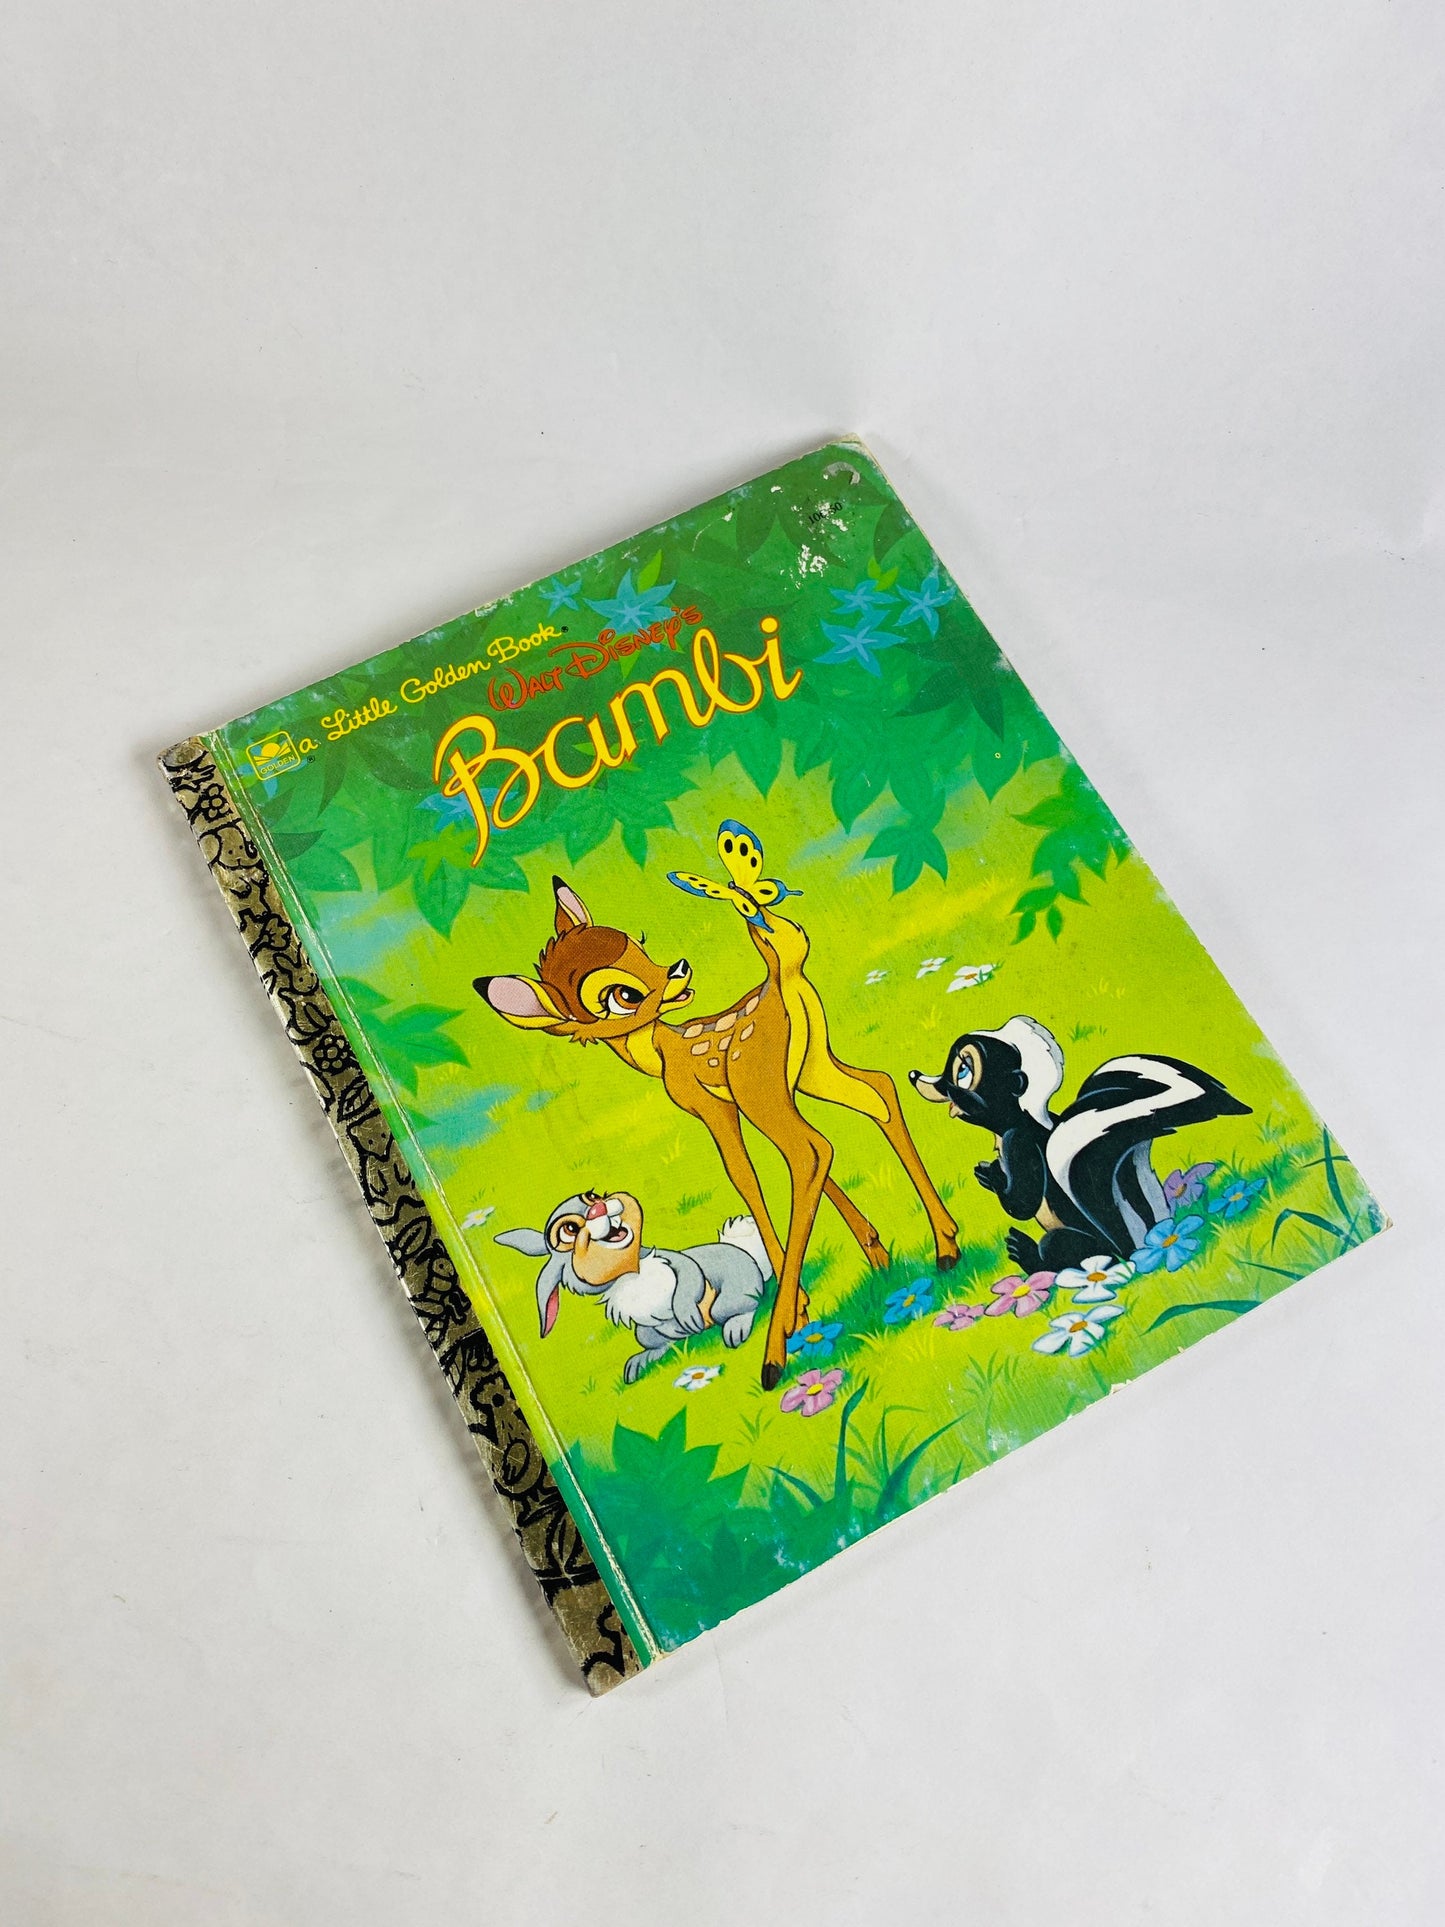 1984 Bambi Walt Disney Little Golden Book with pink back cover Children's at home reading Felix Salten Ron Dias Vintage book gift.